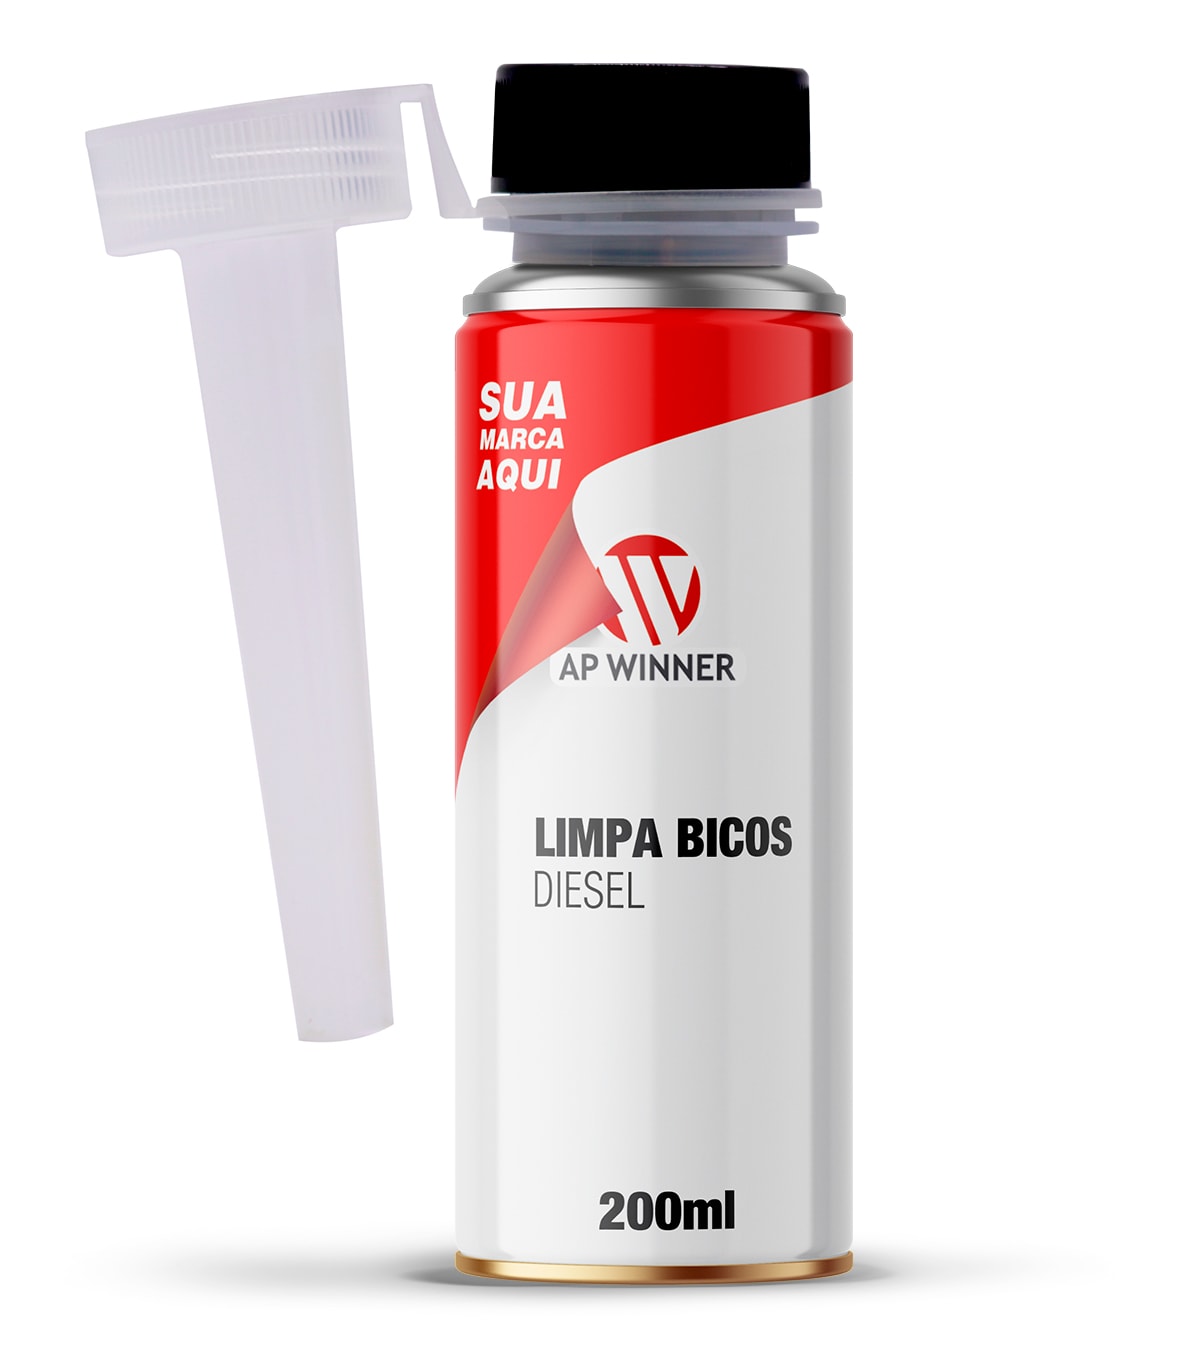 Limpa Bicos Diesel